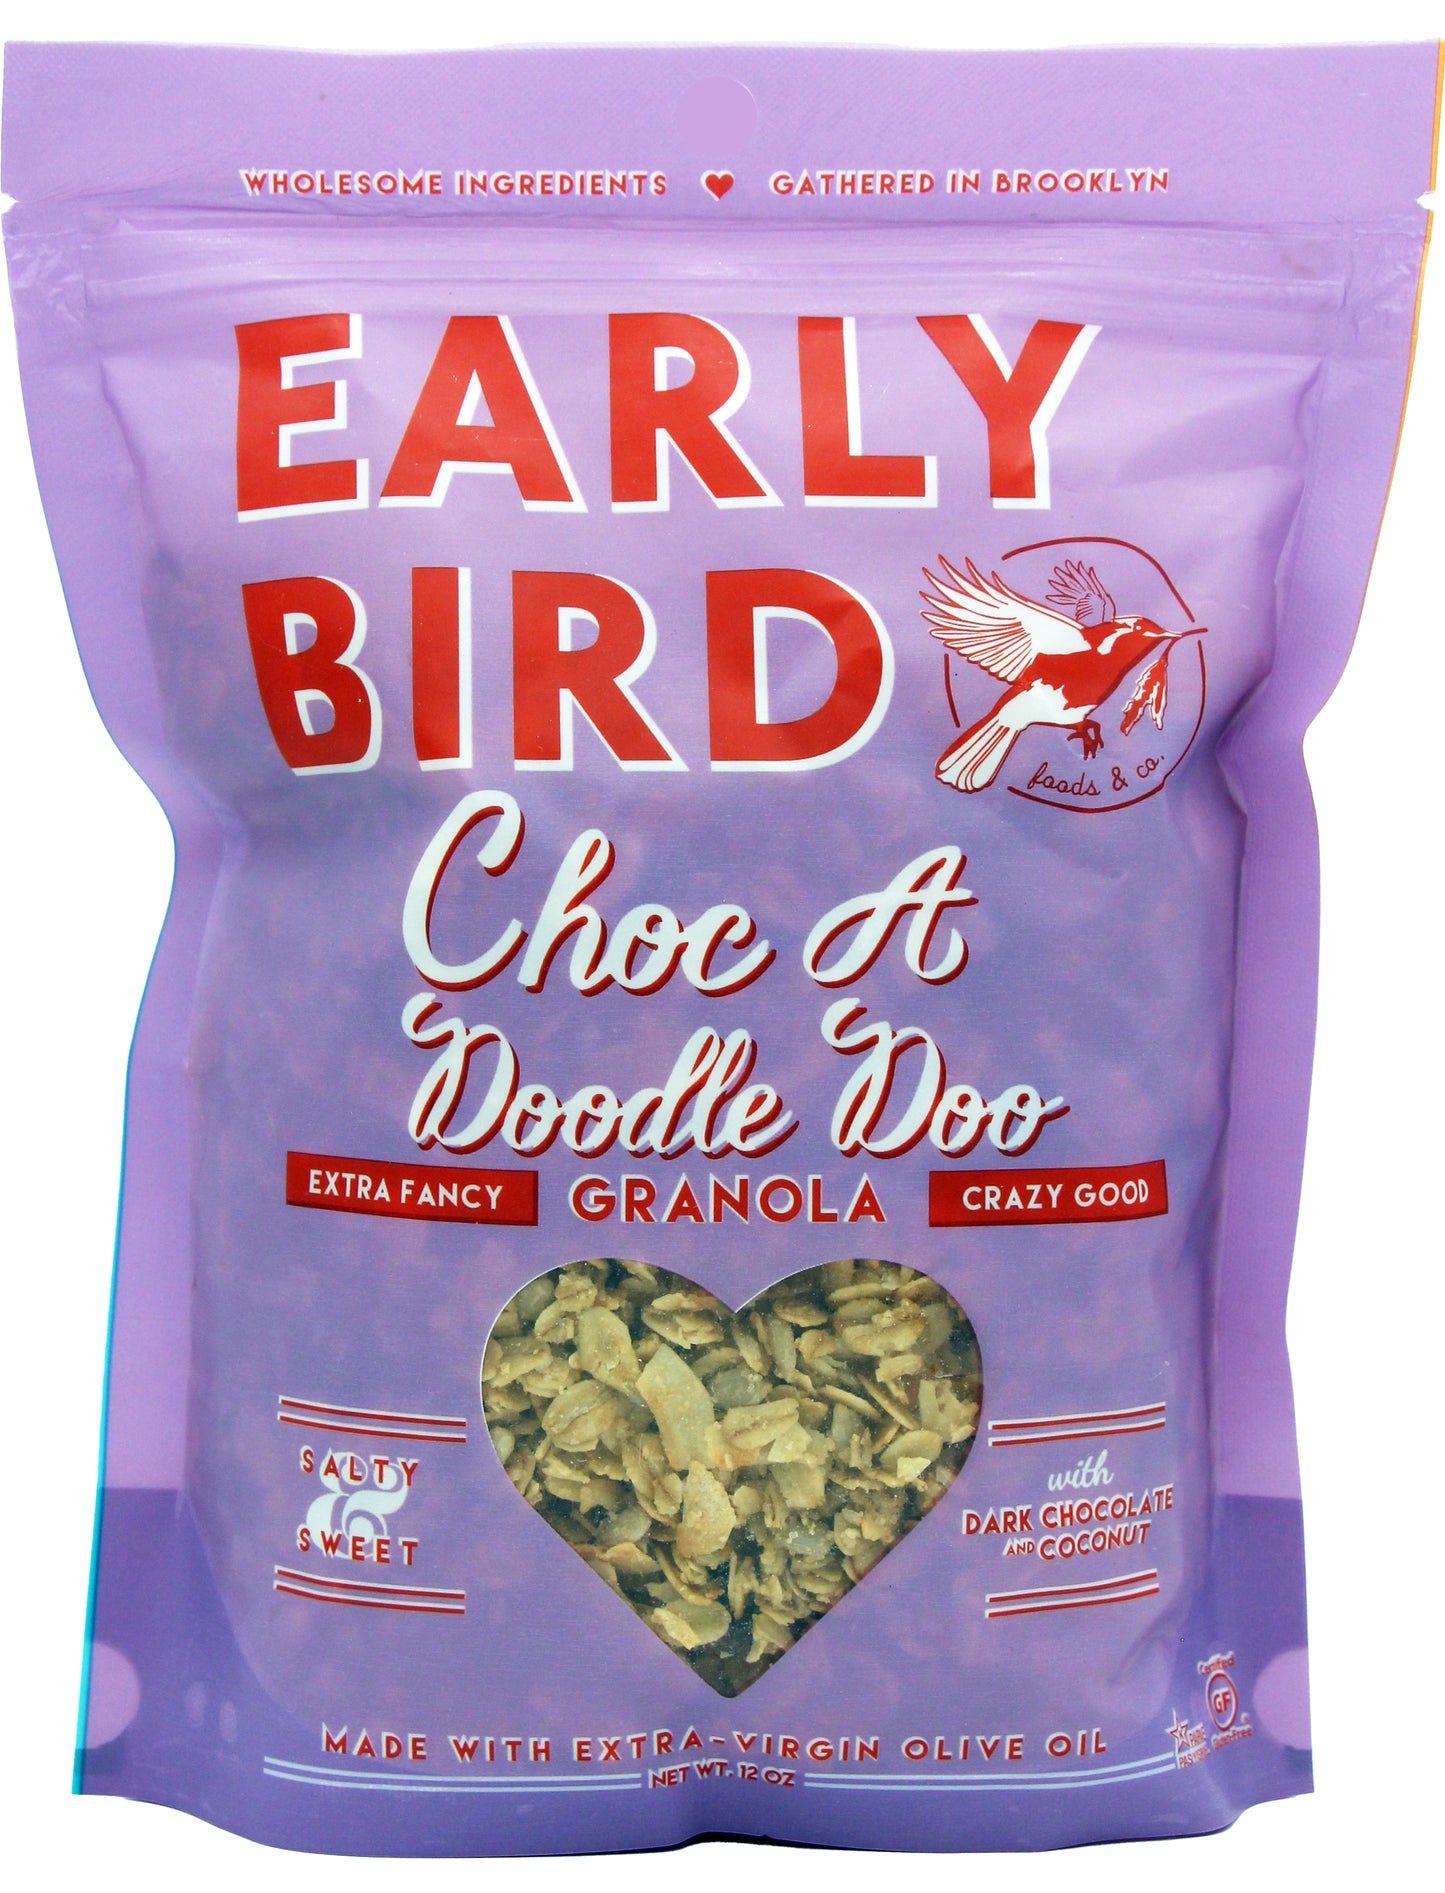 CHOC-A-DOODLE-DOO - Early Bird Foods & Co.